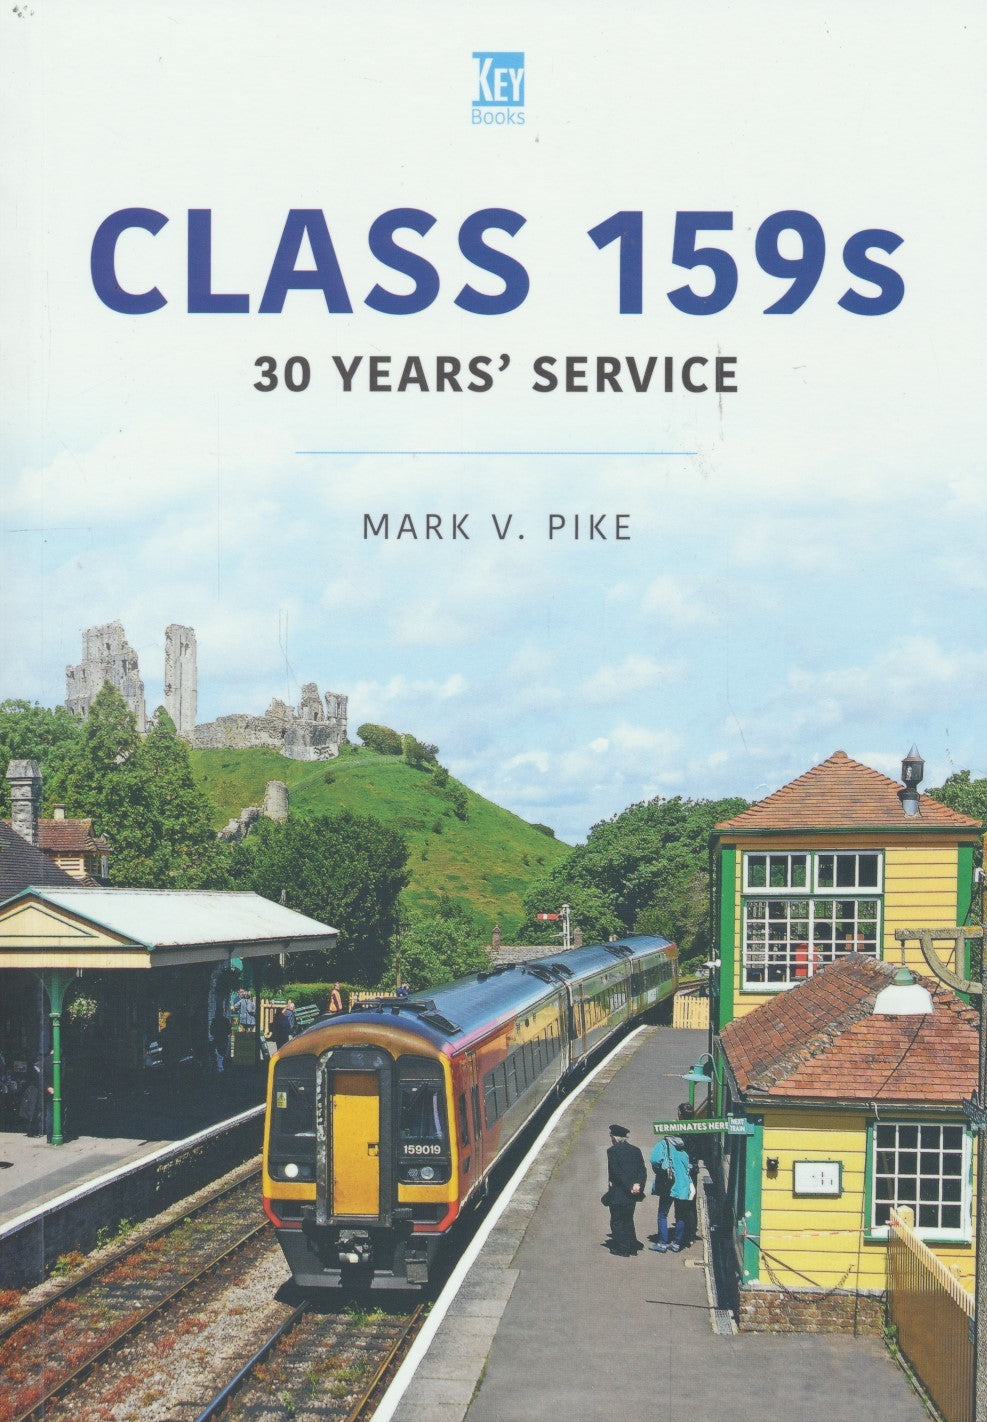 Britain's Railways Series, Volume 47 - Class 159s